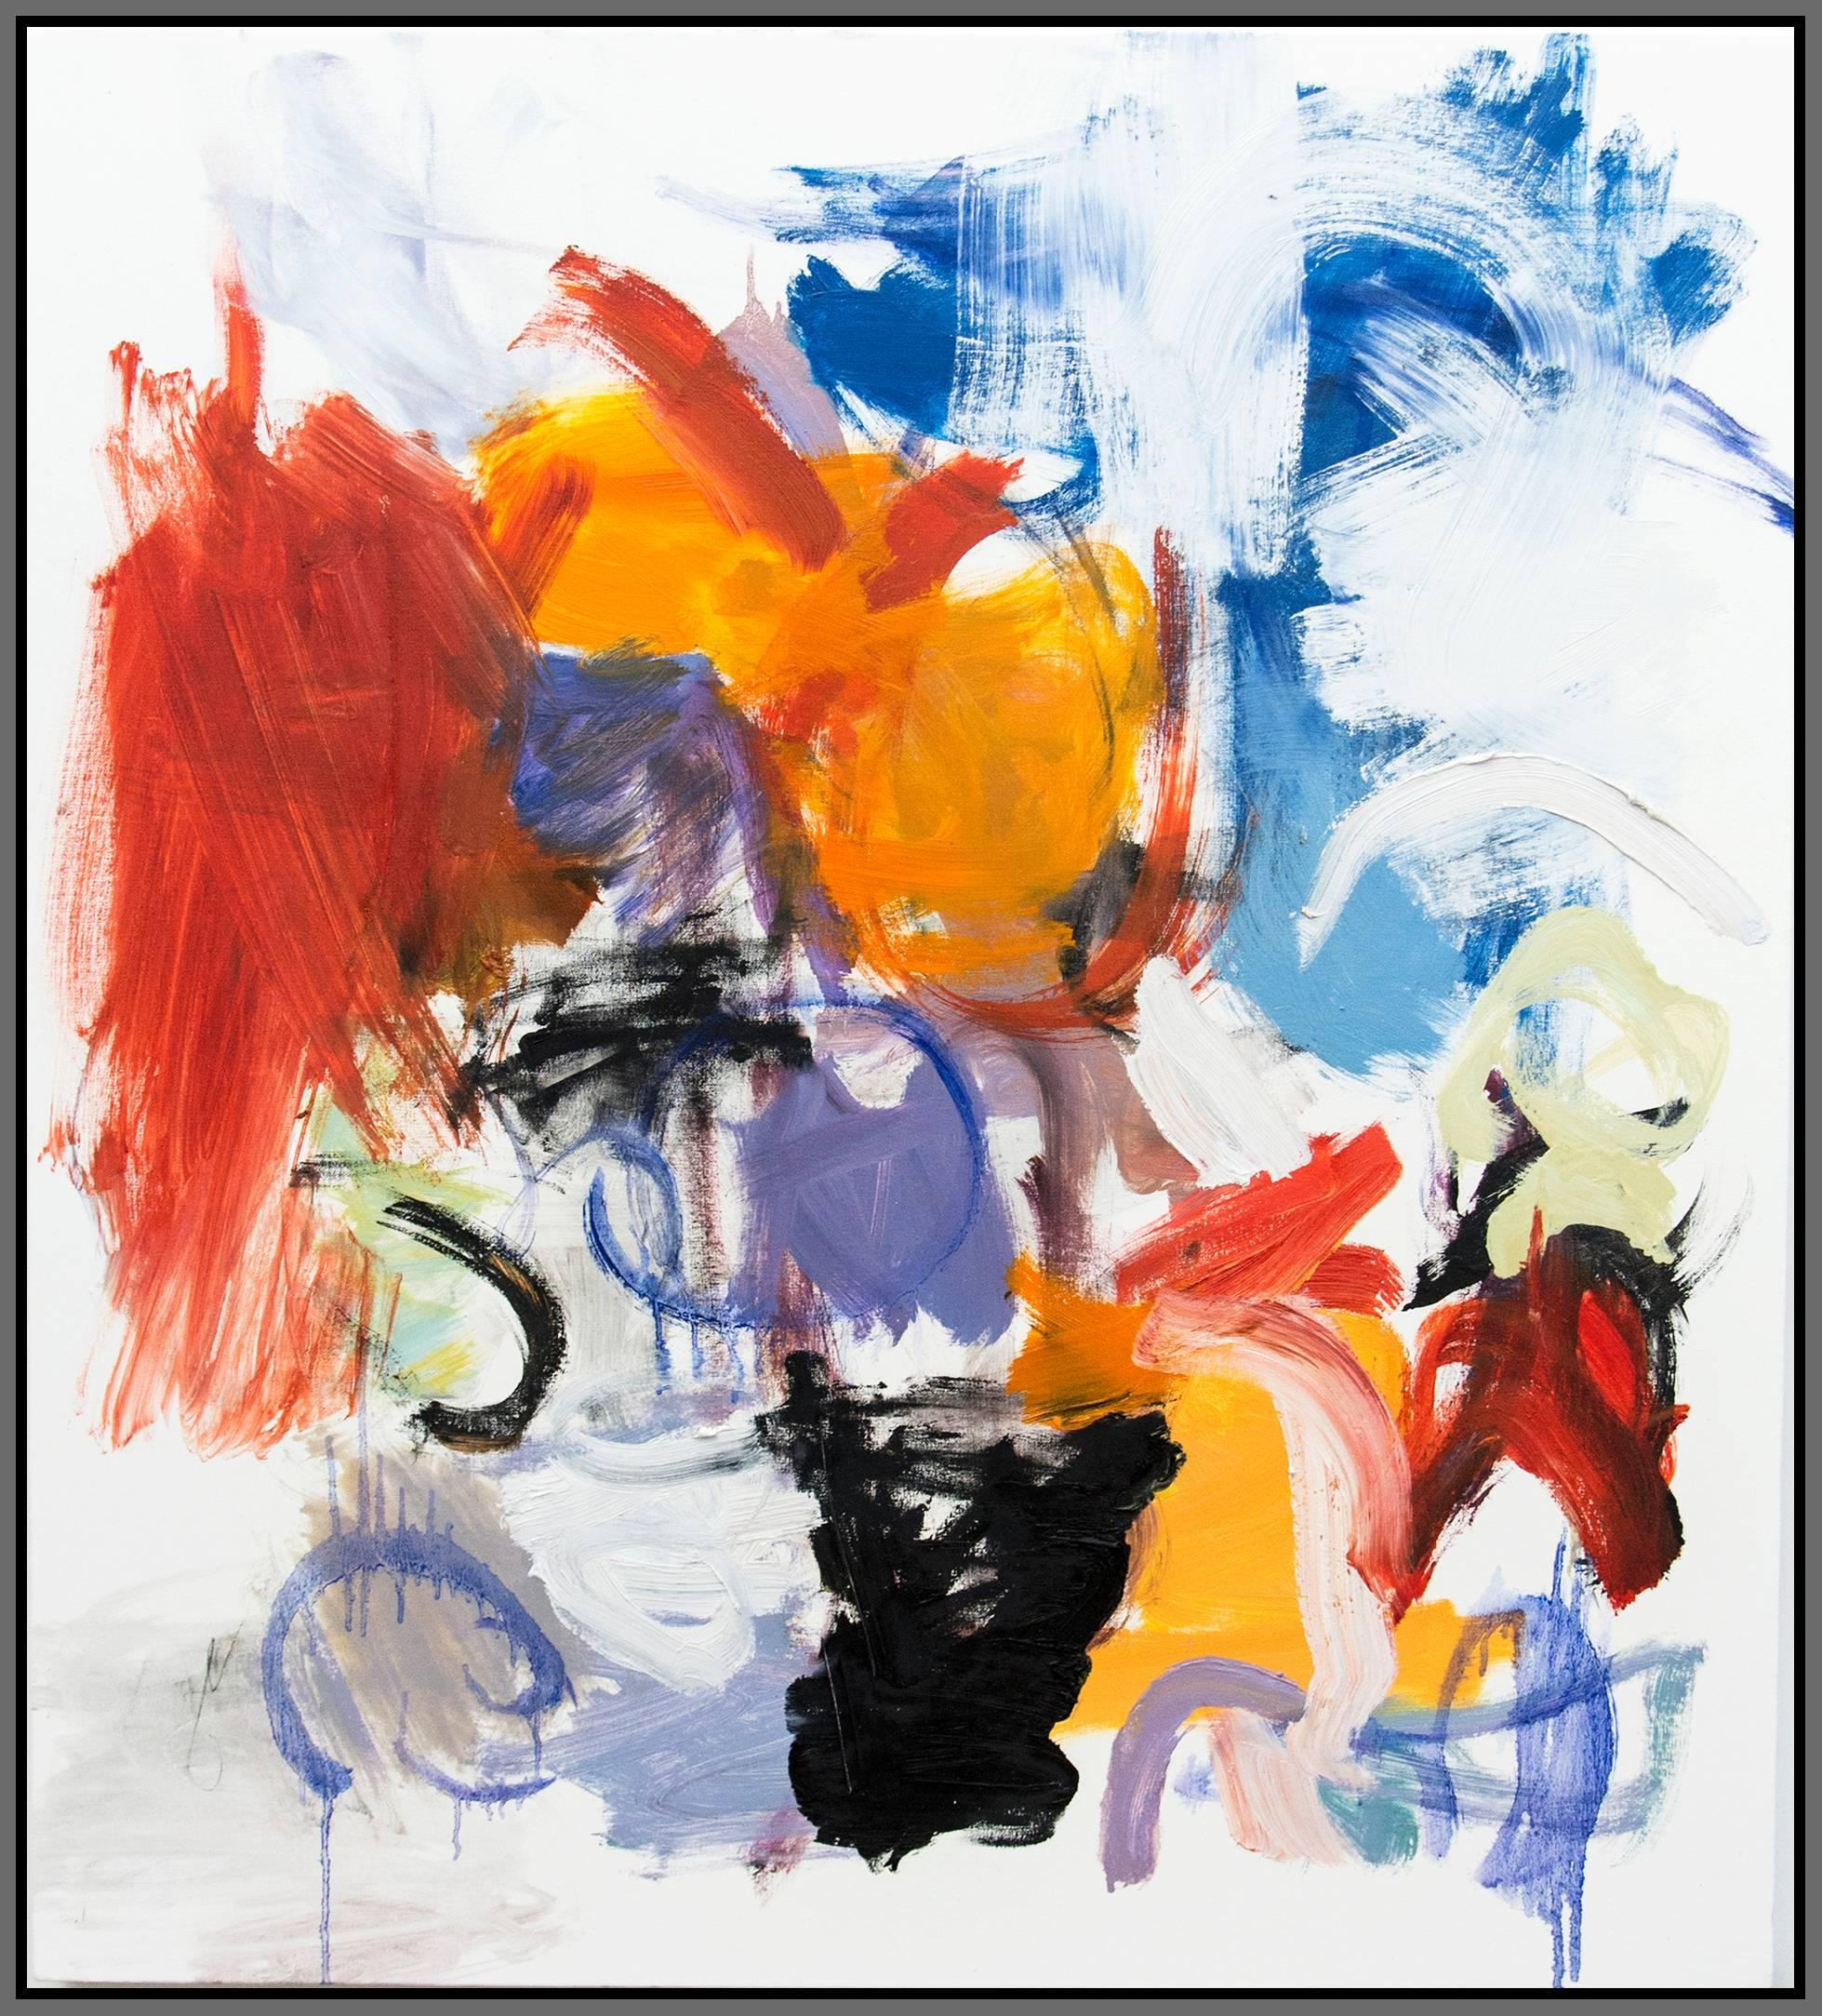 Scott Pattinson Abstract Painting - Kairoi No 7